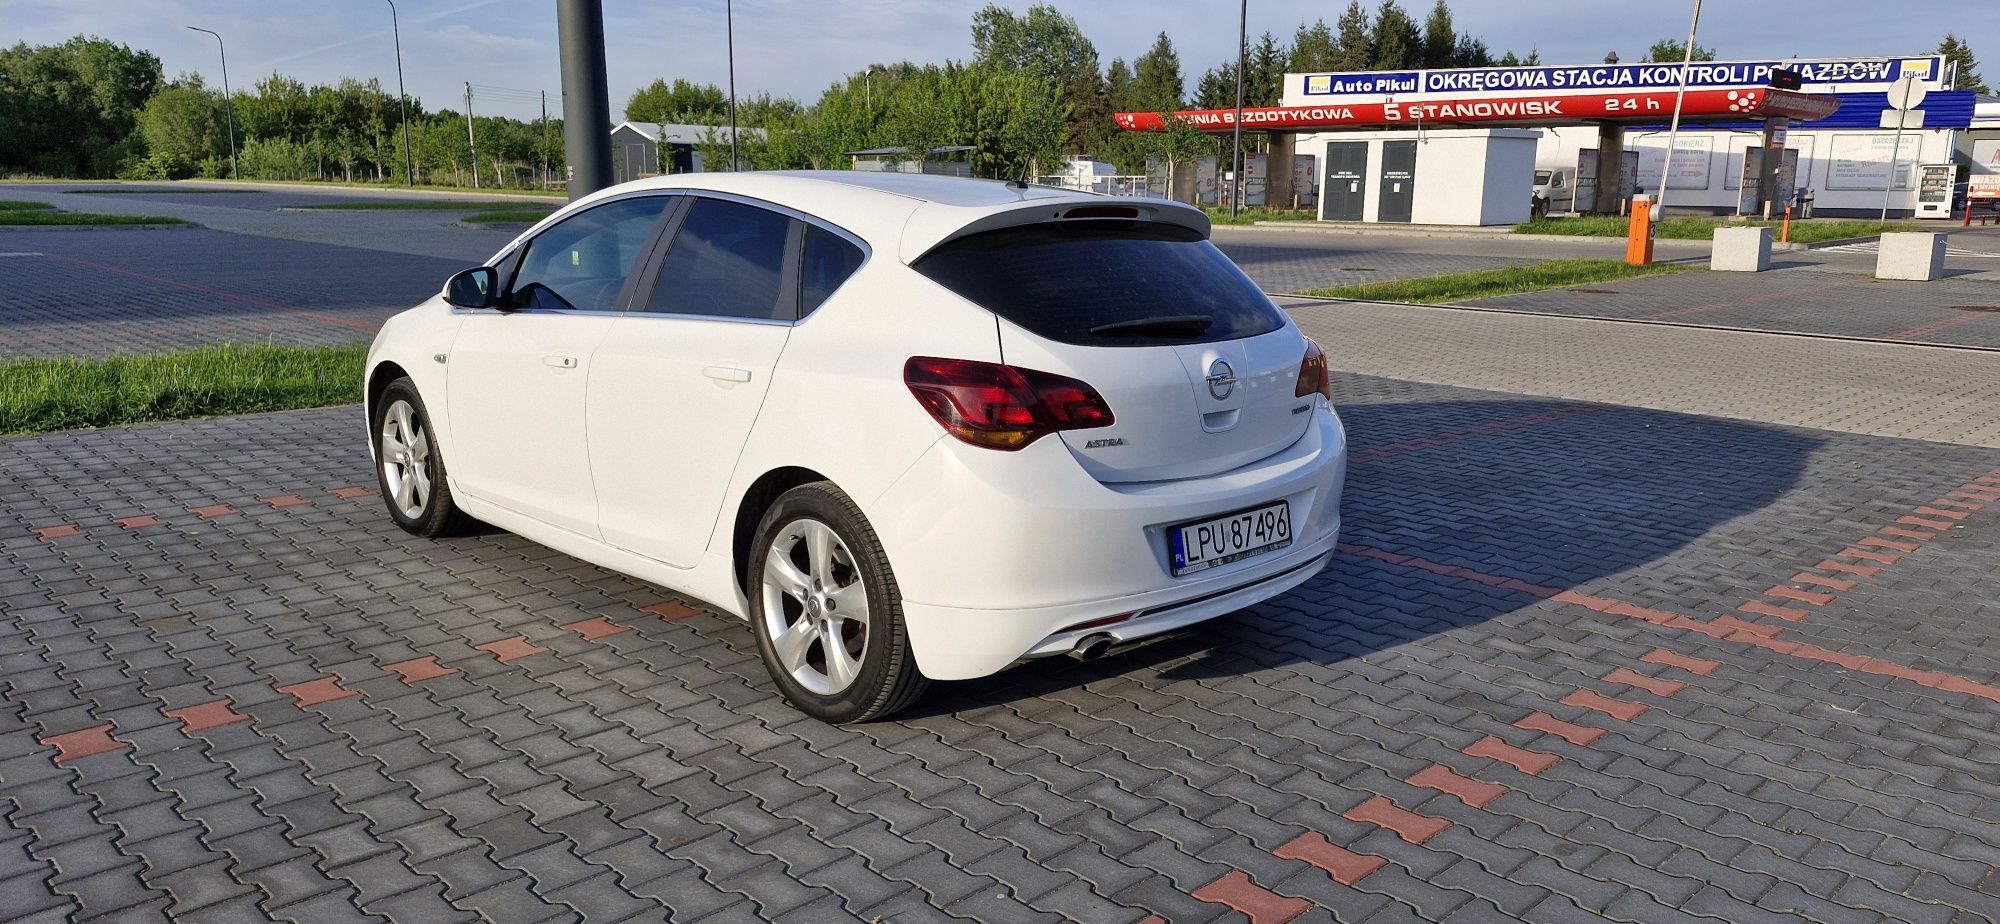 Opel Astra J 1.6 Turbo  LPG OPC line VW audi seat  salon Polska